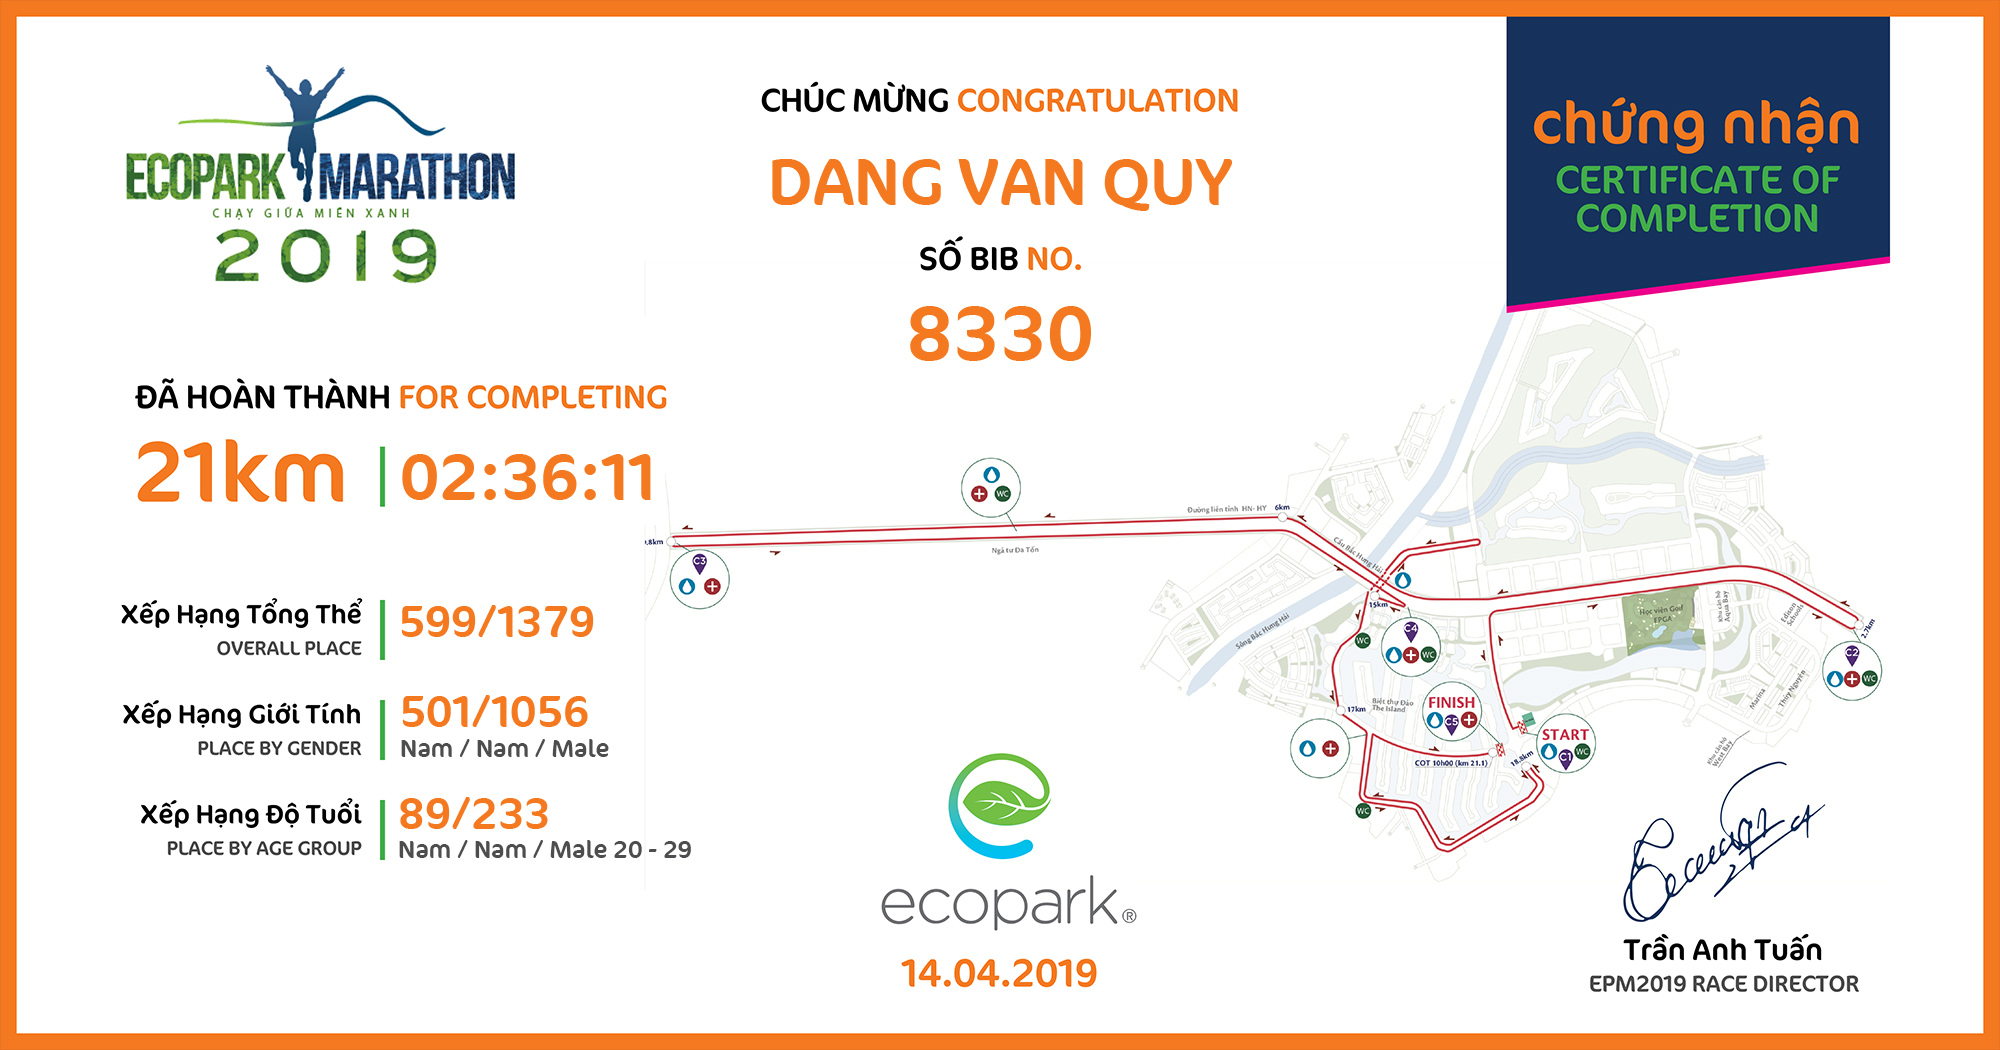 8330 - Dang Van Quy